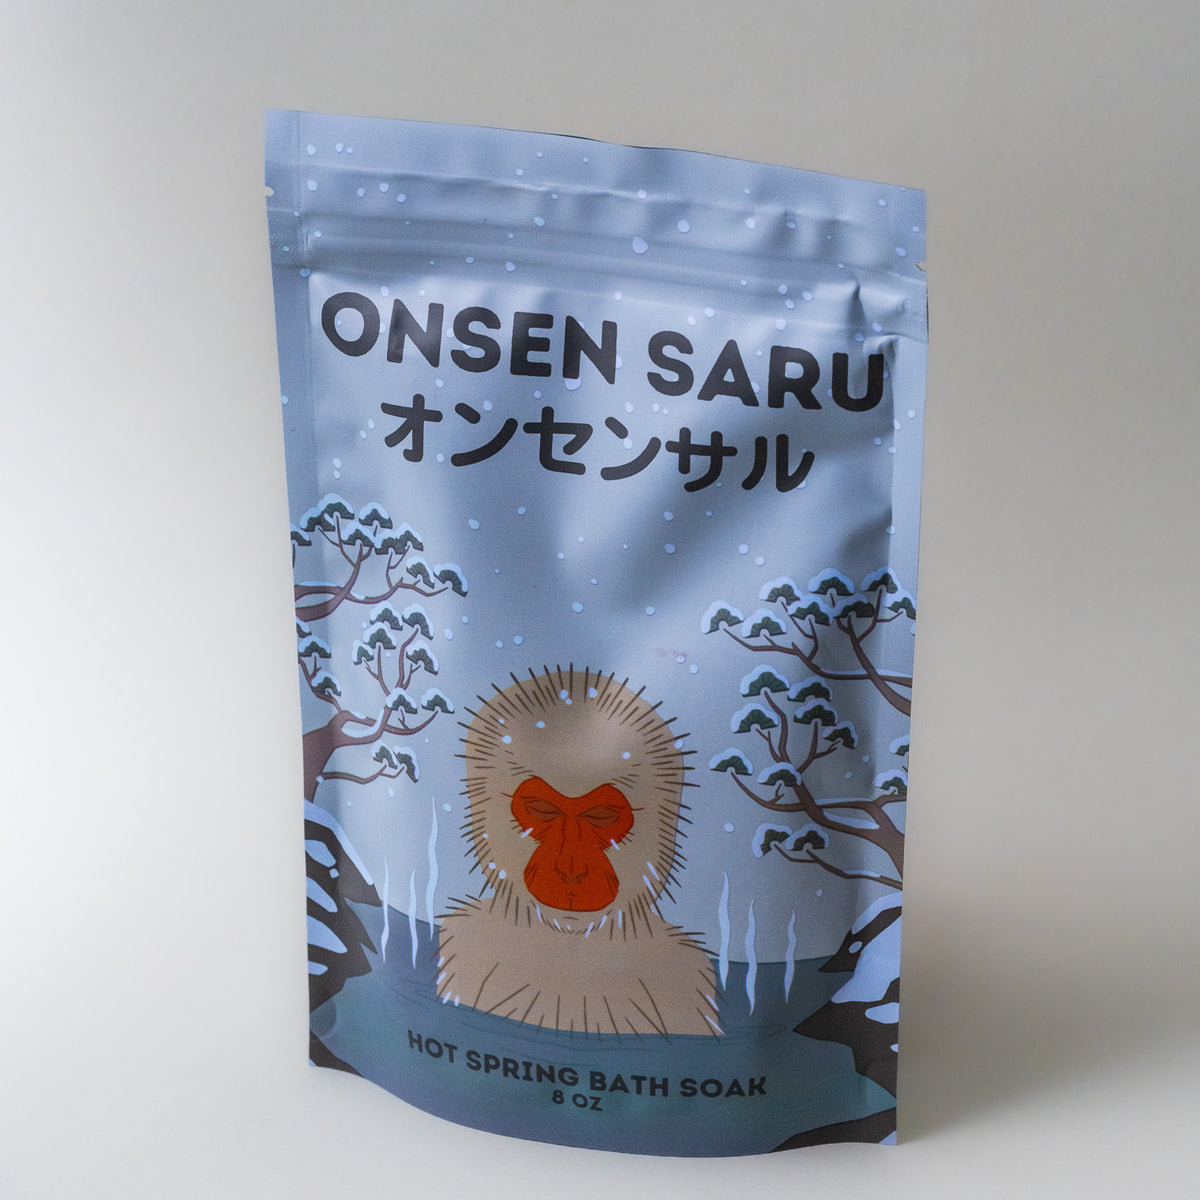 Onsen Saru - Hot Spring Bath Soak